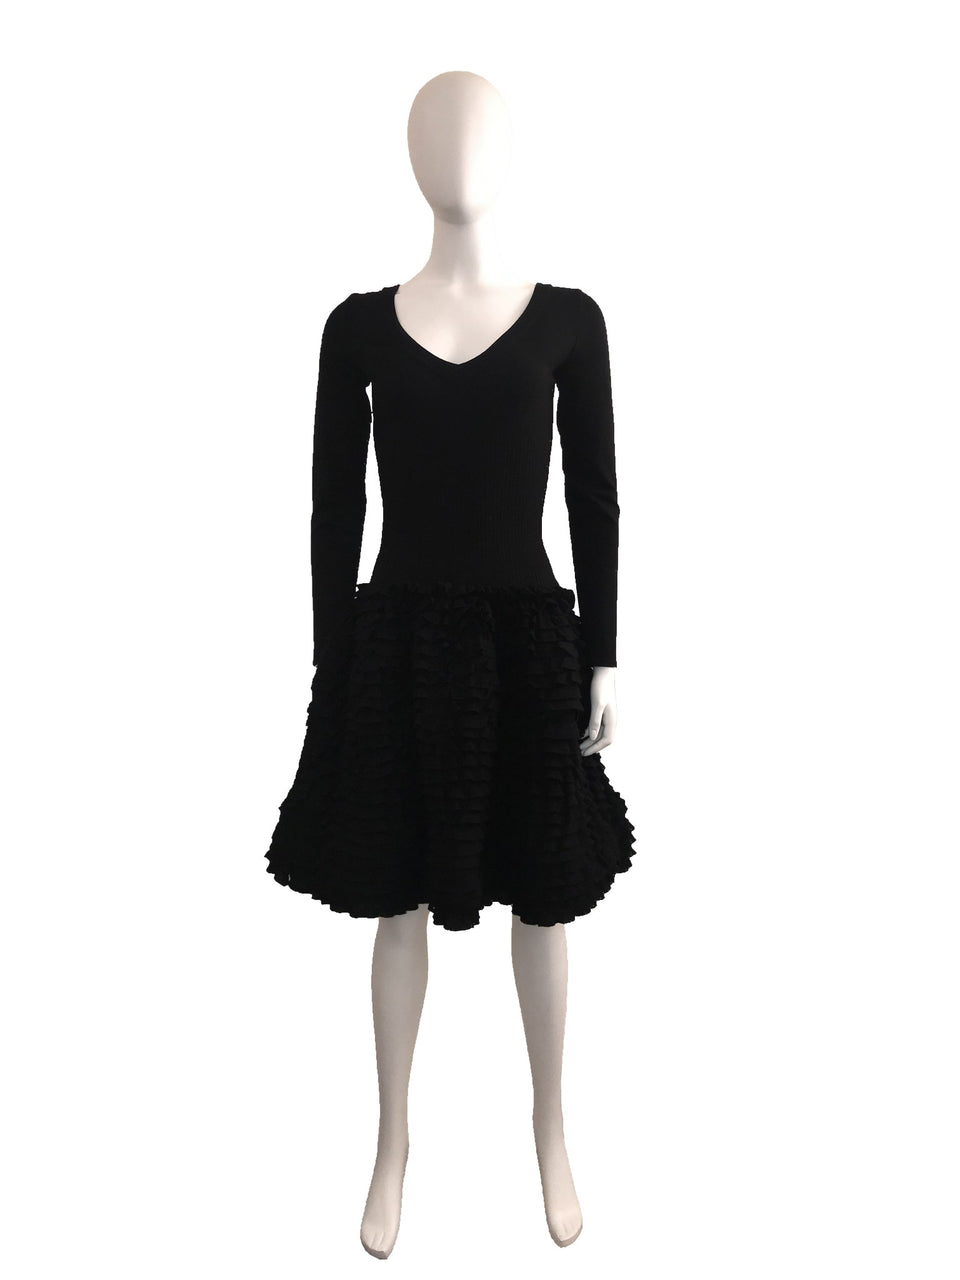 Knit Dress with Ruffle Skirt